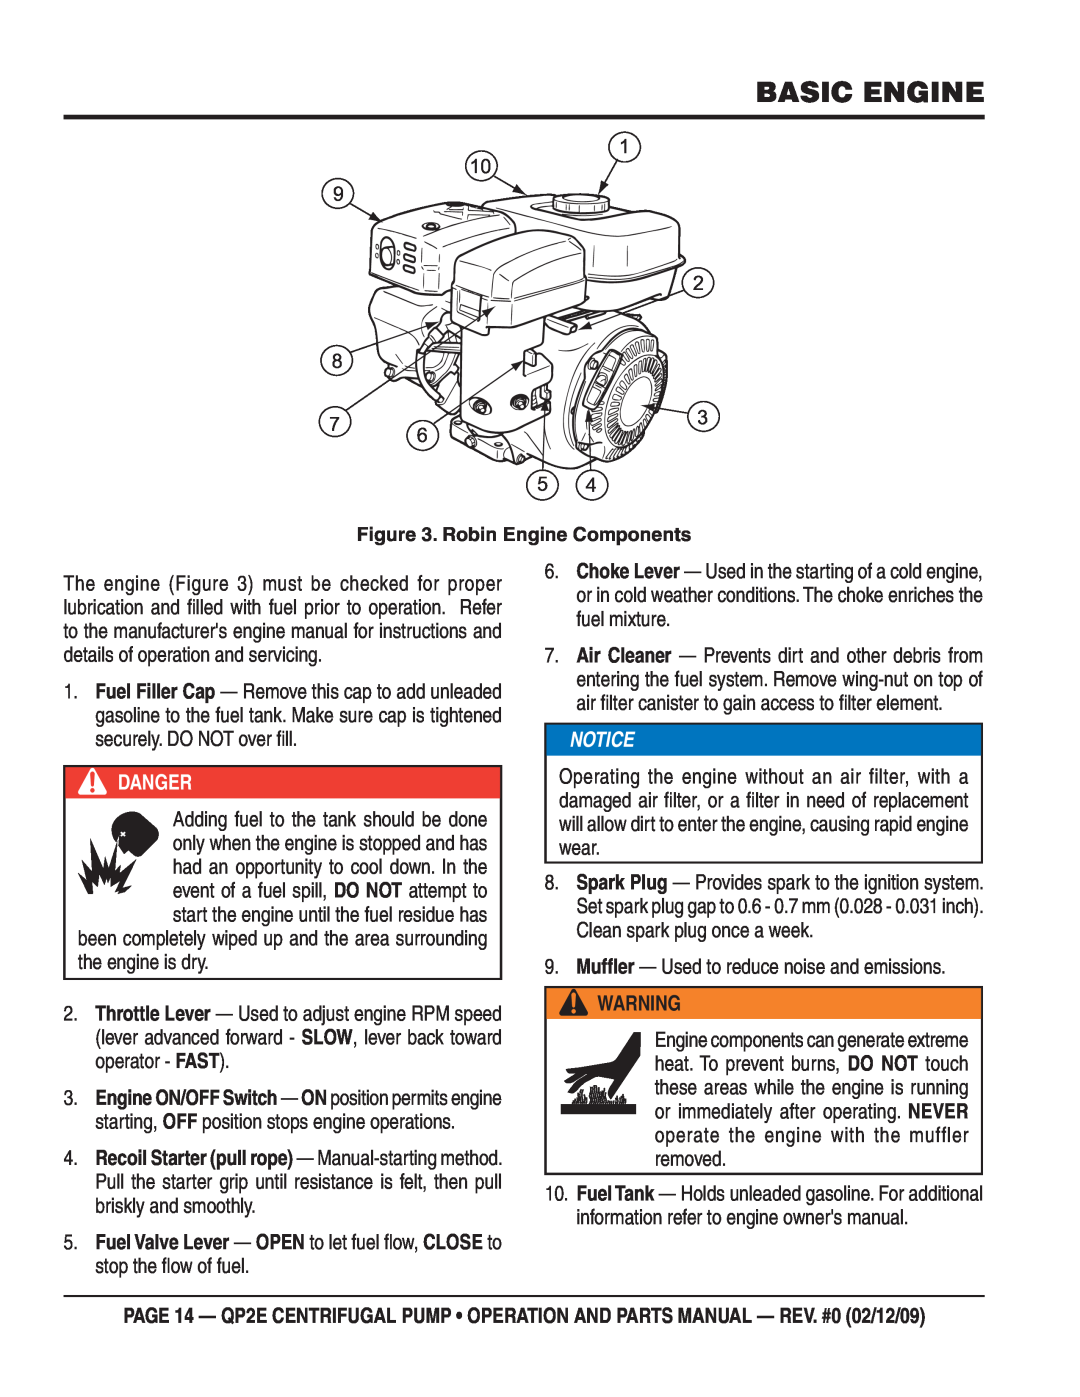 Multiquip QP2E manual Basic Engine, Notice, Danger 